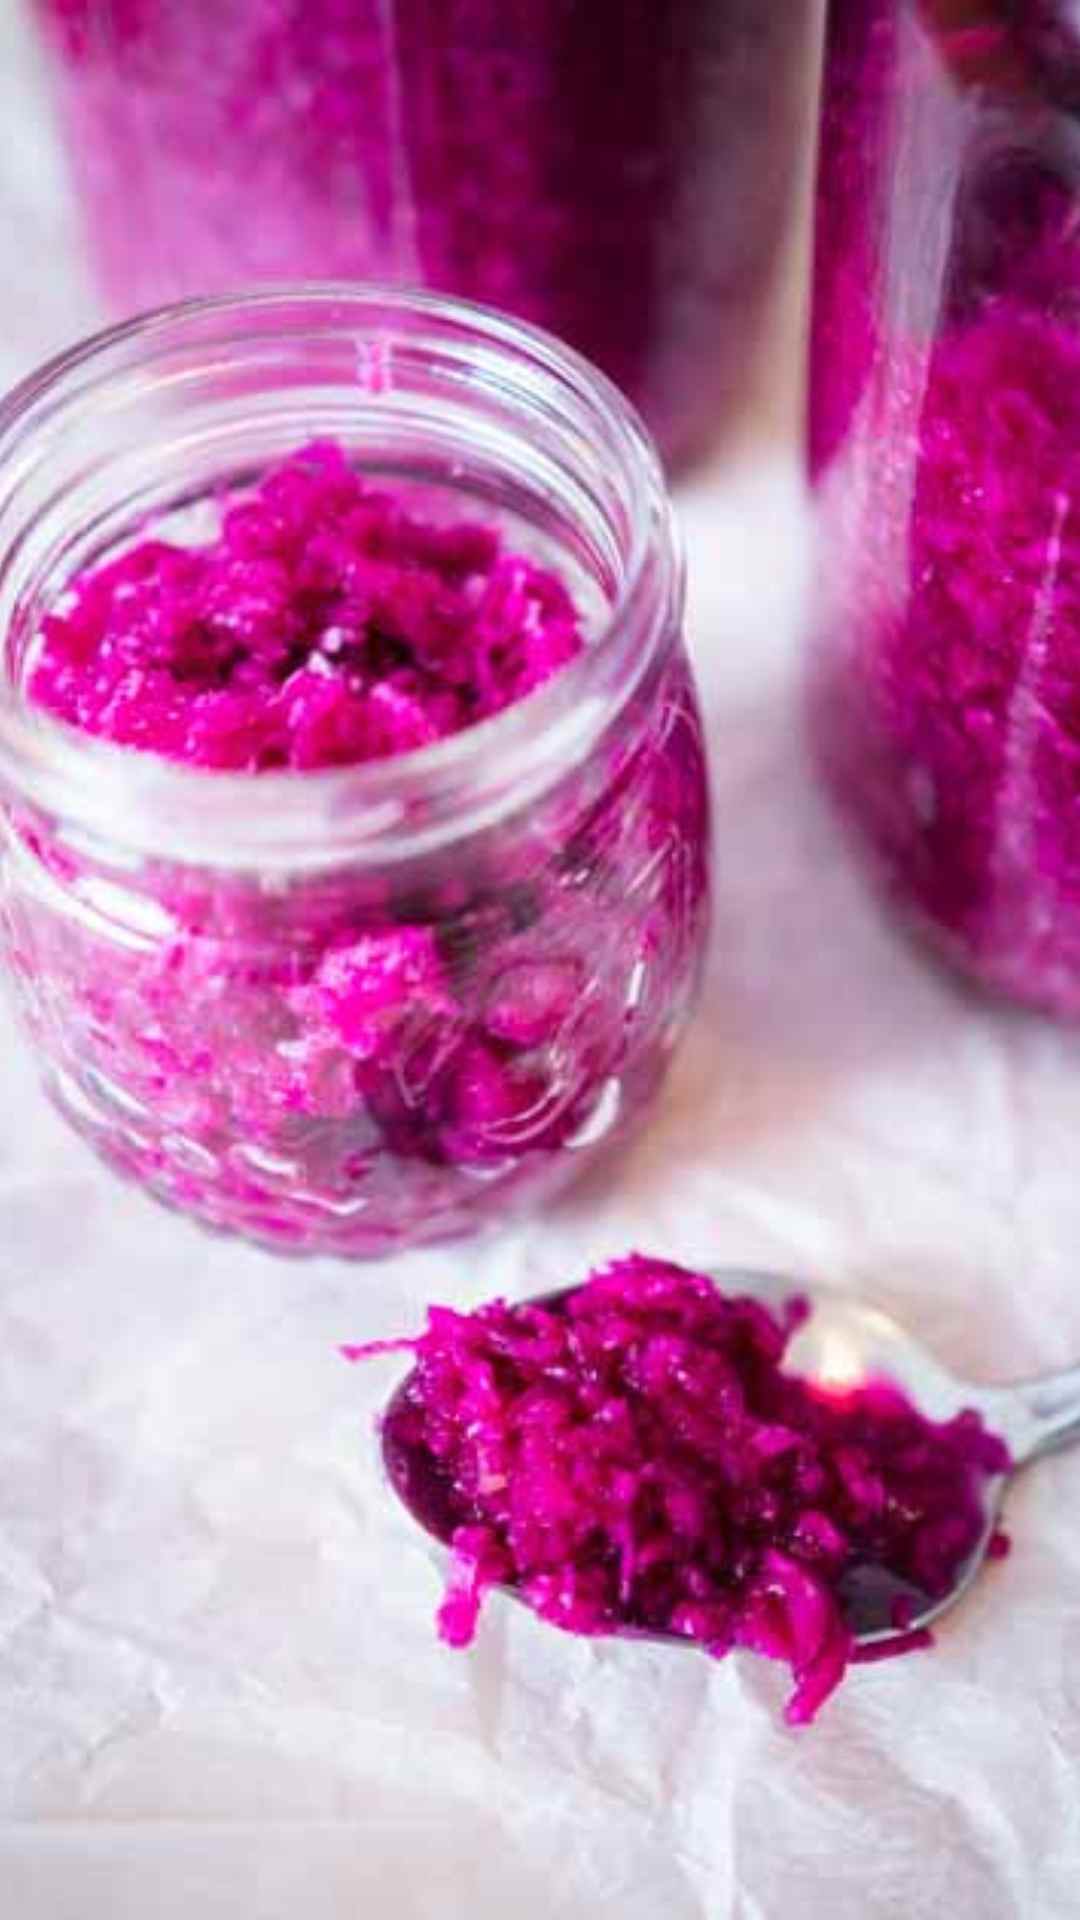 Fermented Red Cabbage Sauerkraut Recipe